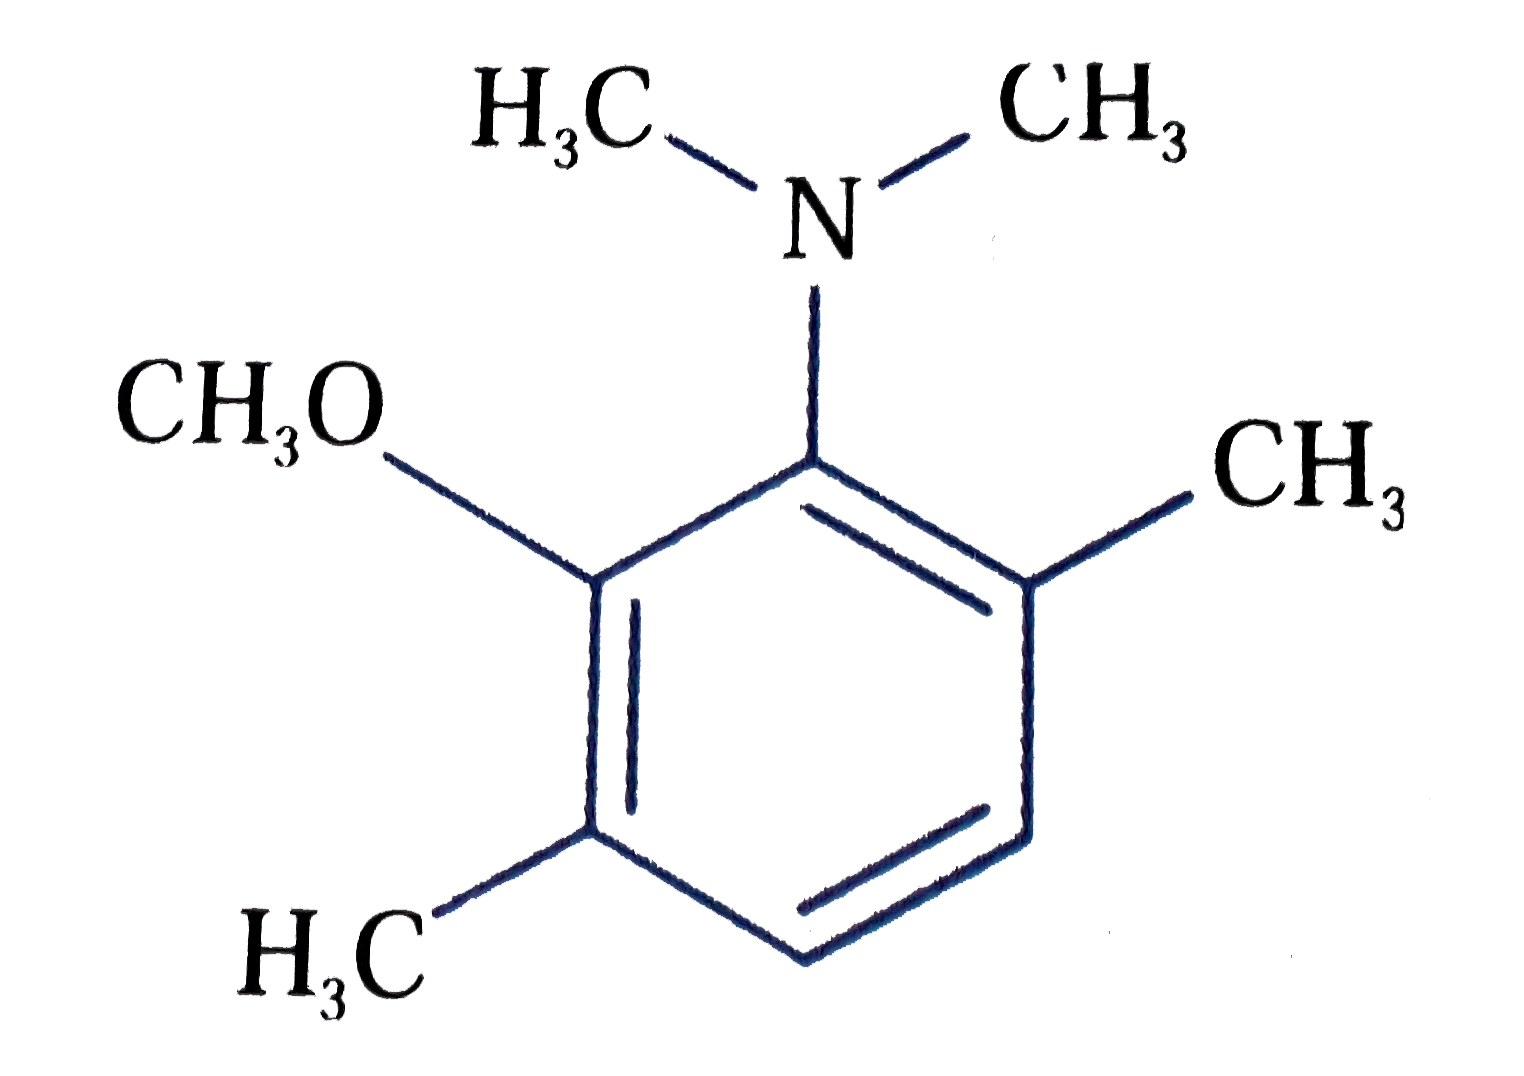 The correct IUPAC name of the amine: